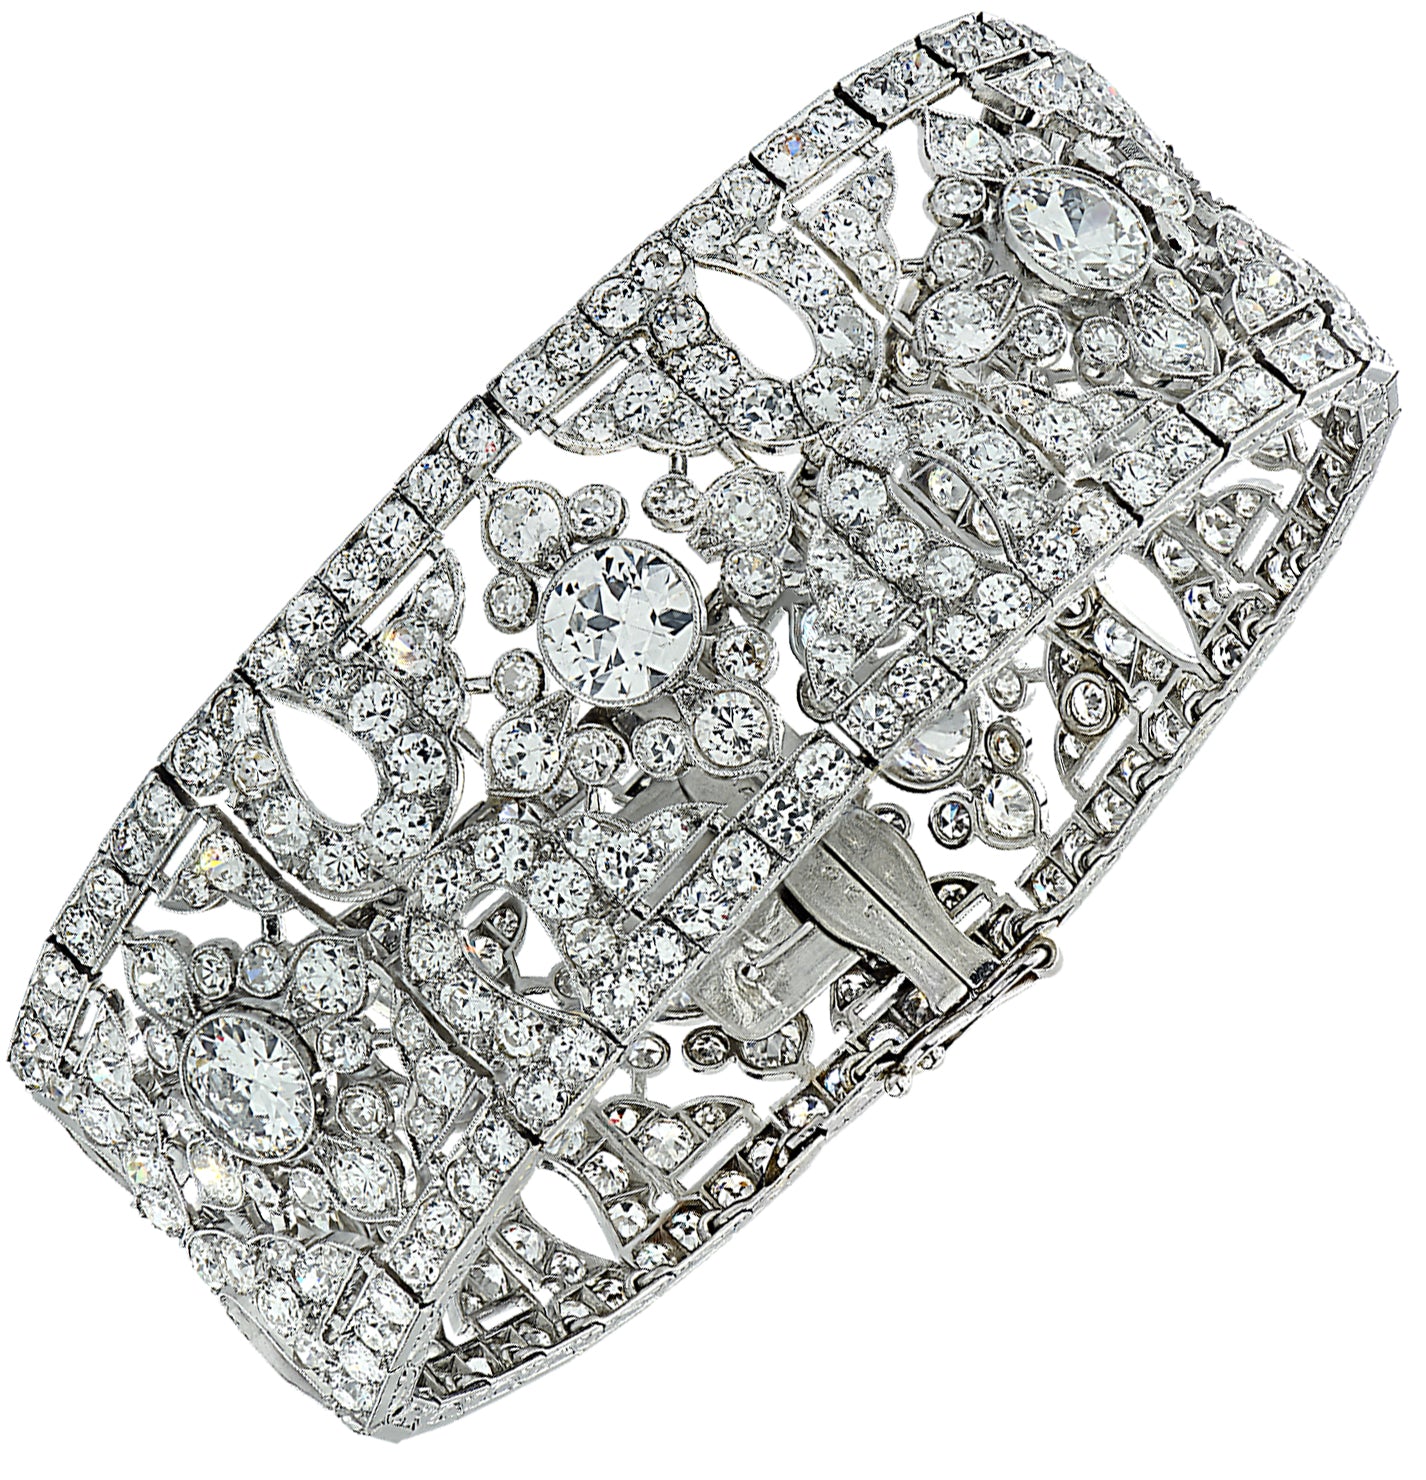 RARE Cartier Love Bracelet in Platinum, Size 16 (C-509) | eBay